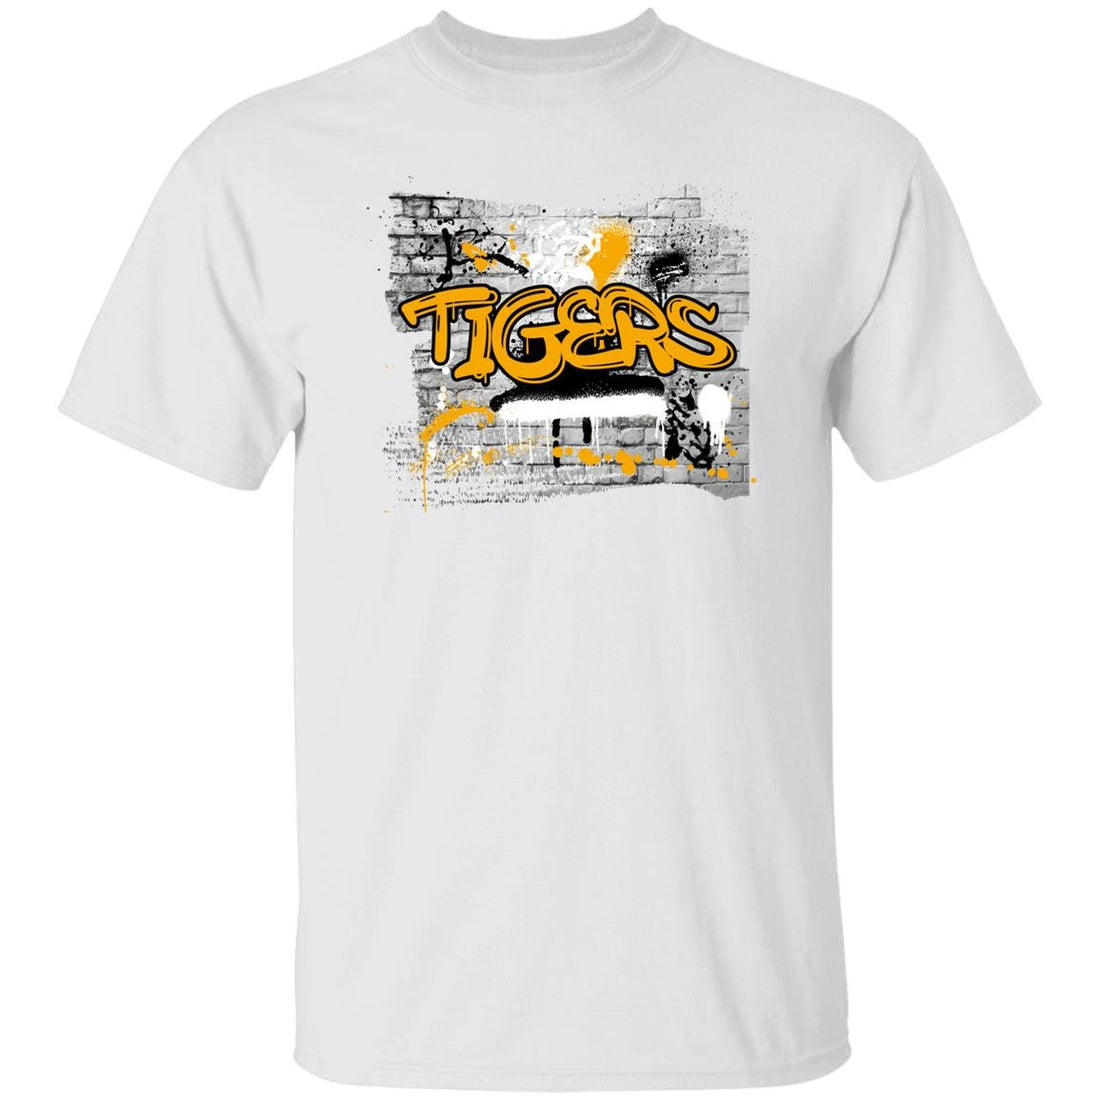 Tigers Graffiti T-Shirt - T-Shirts - Positively Sassy - Tigers Graffiti T-Shirt